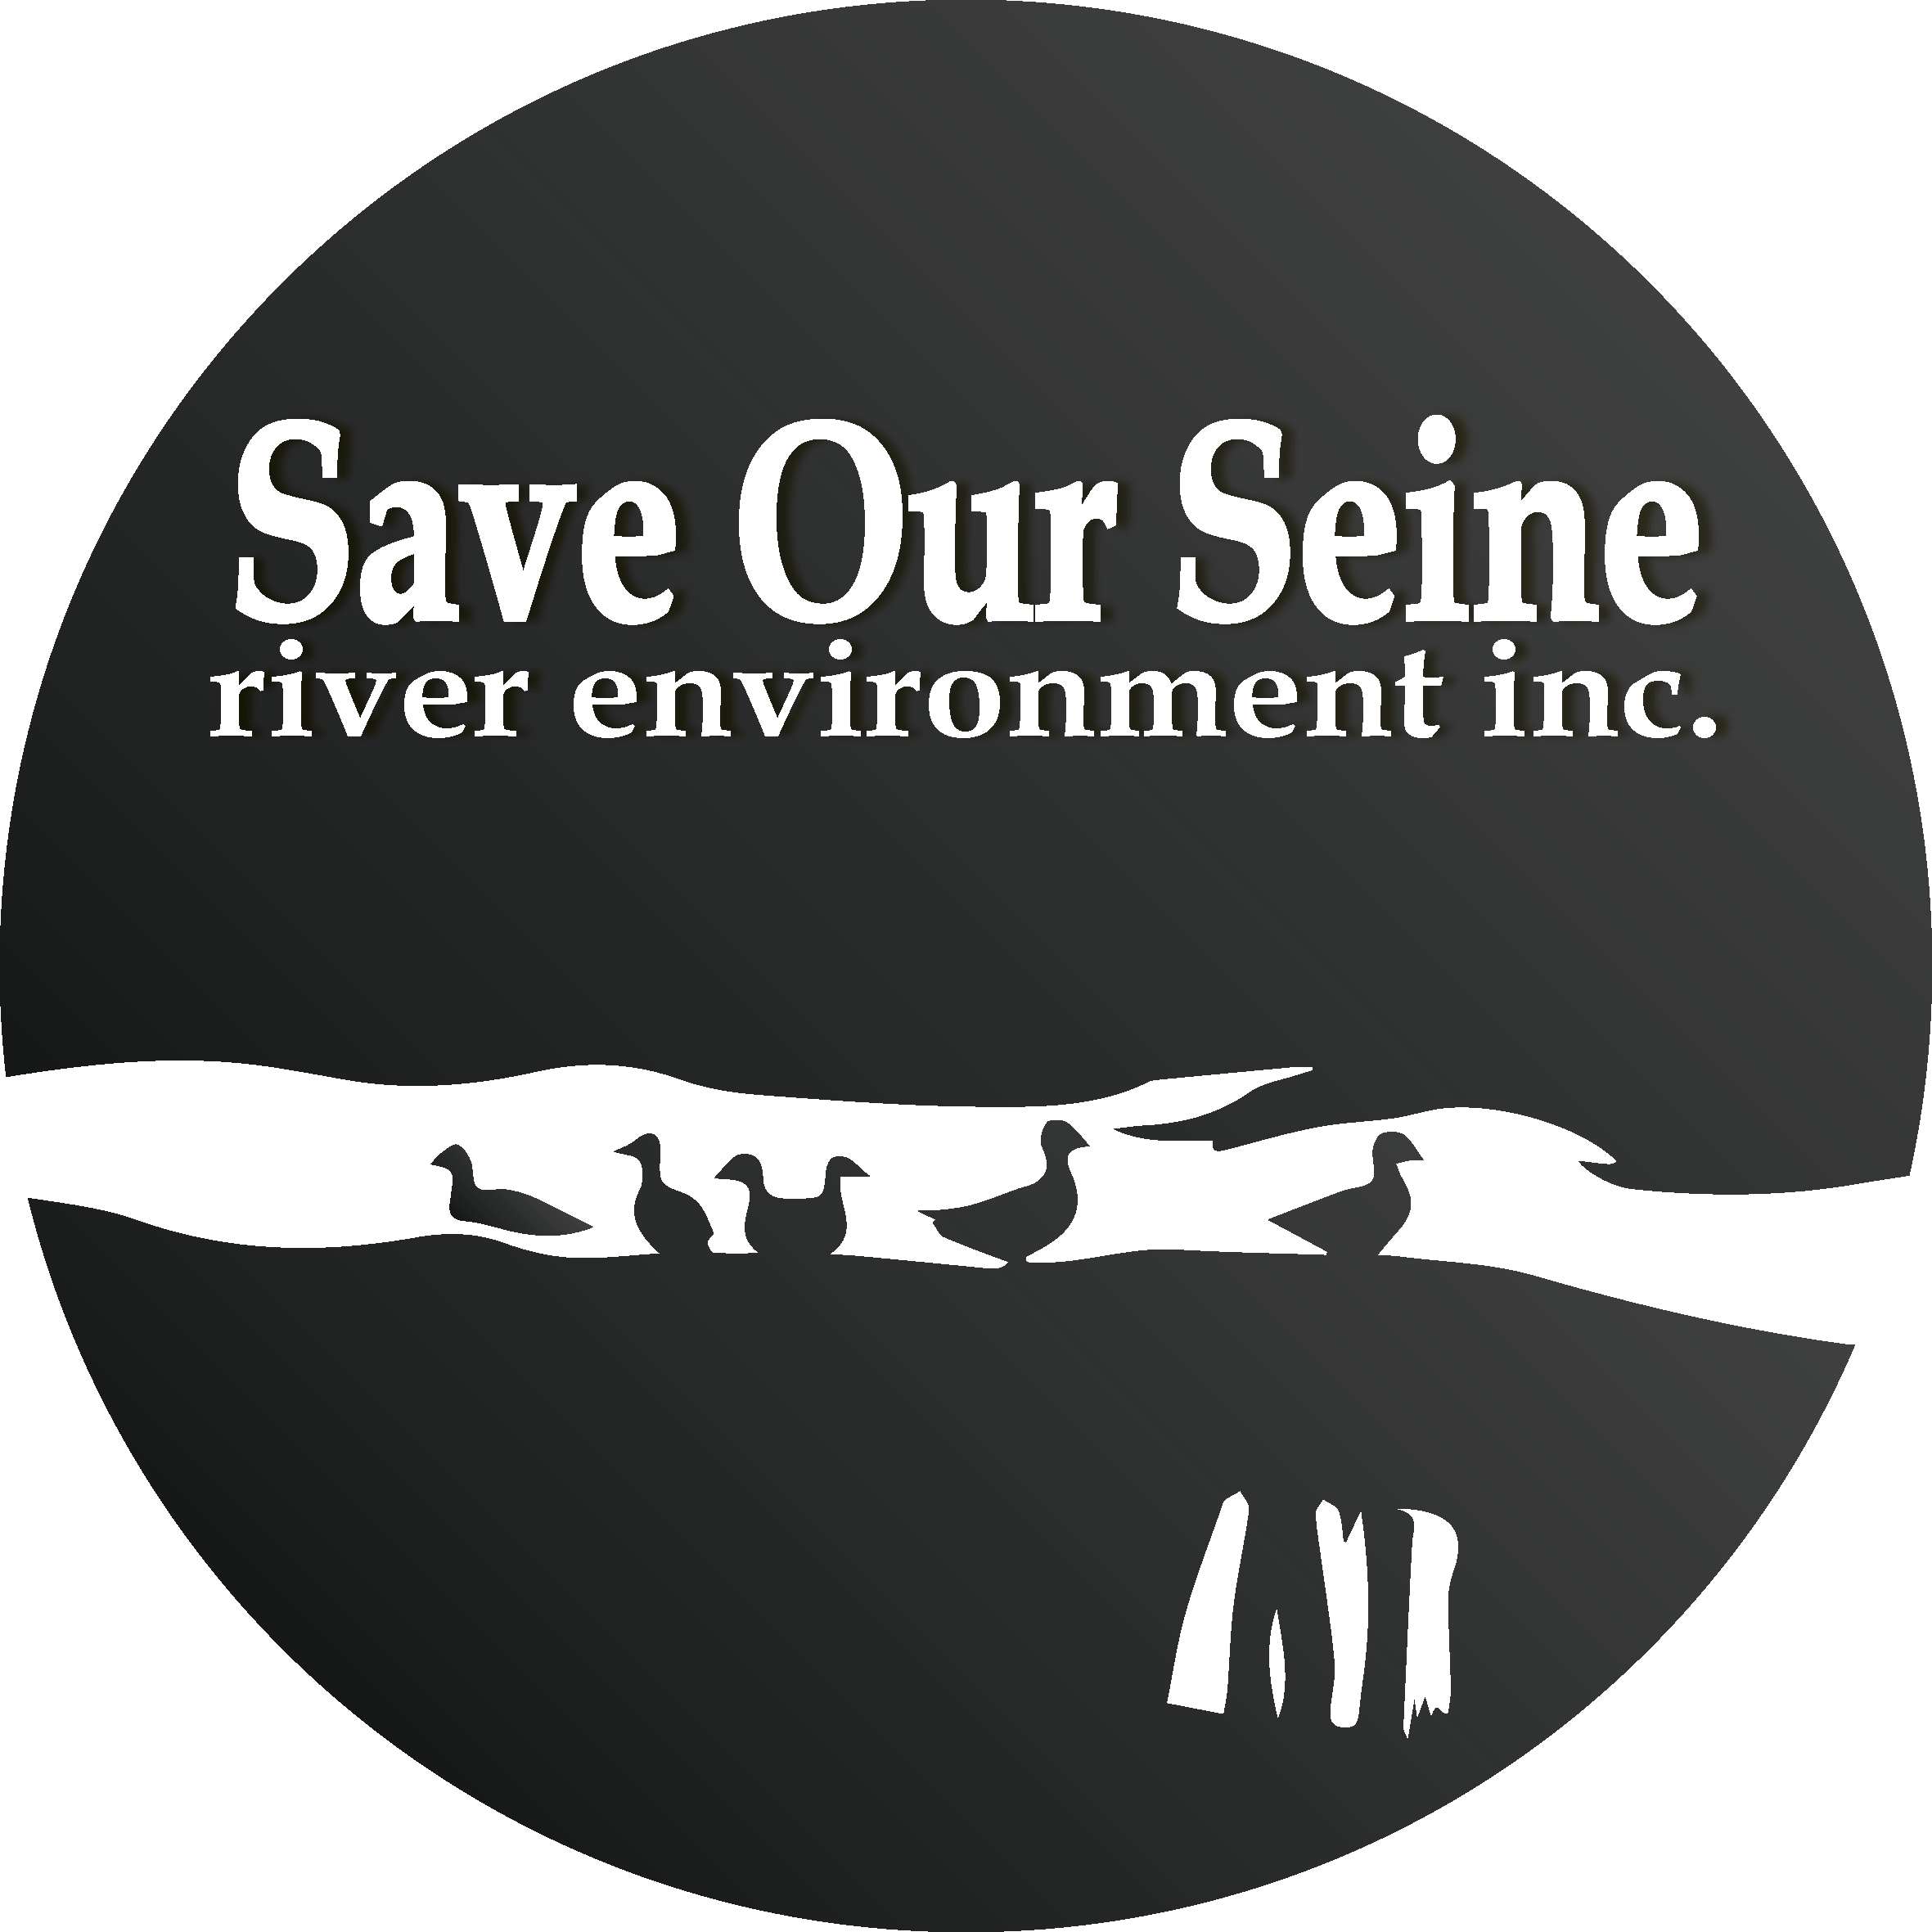 SAVE OUR SEINE logo